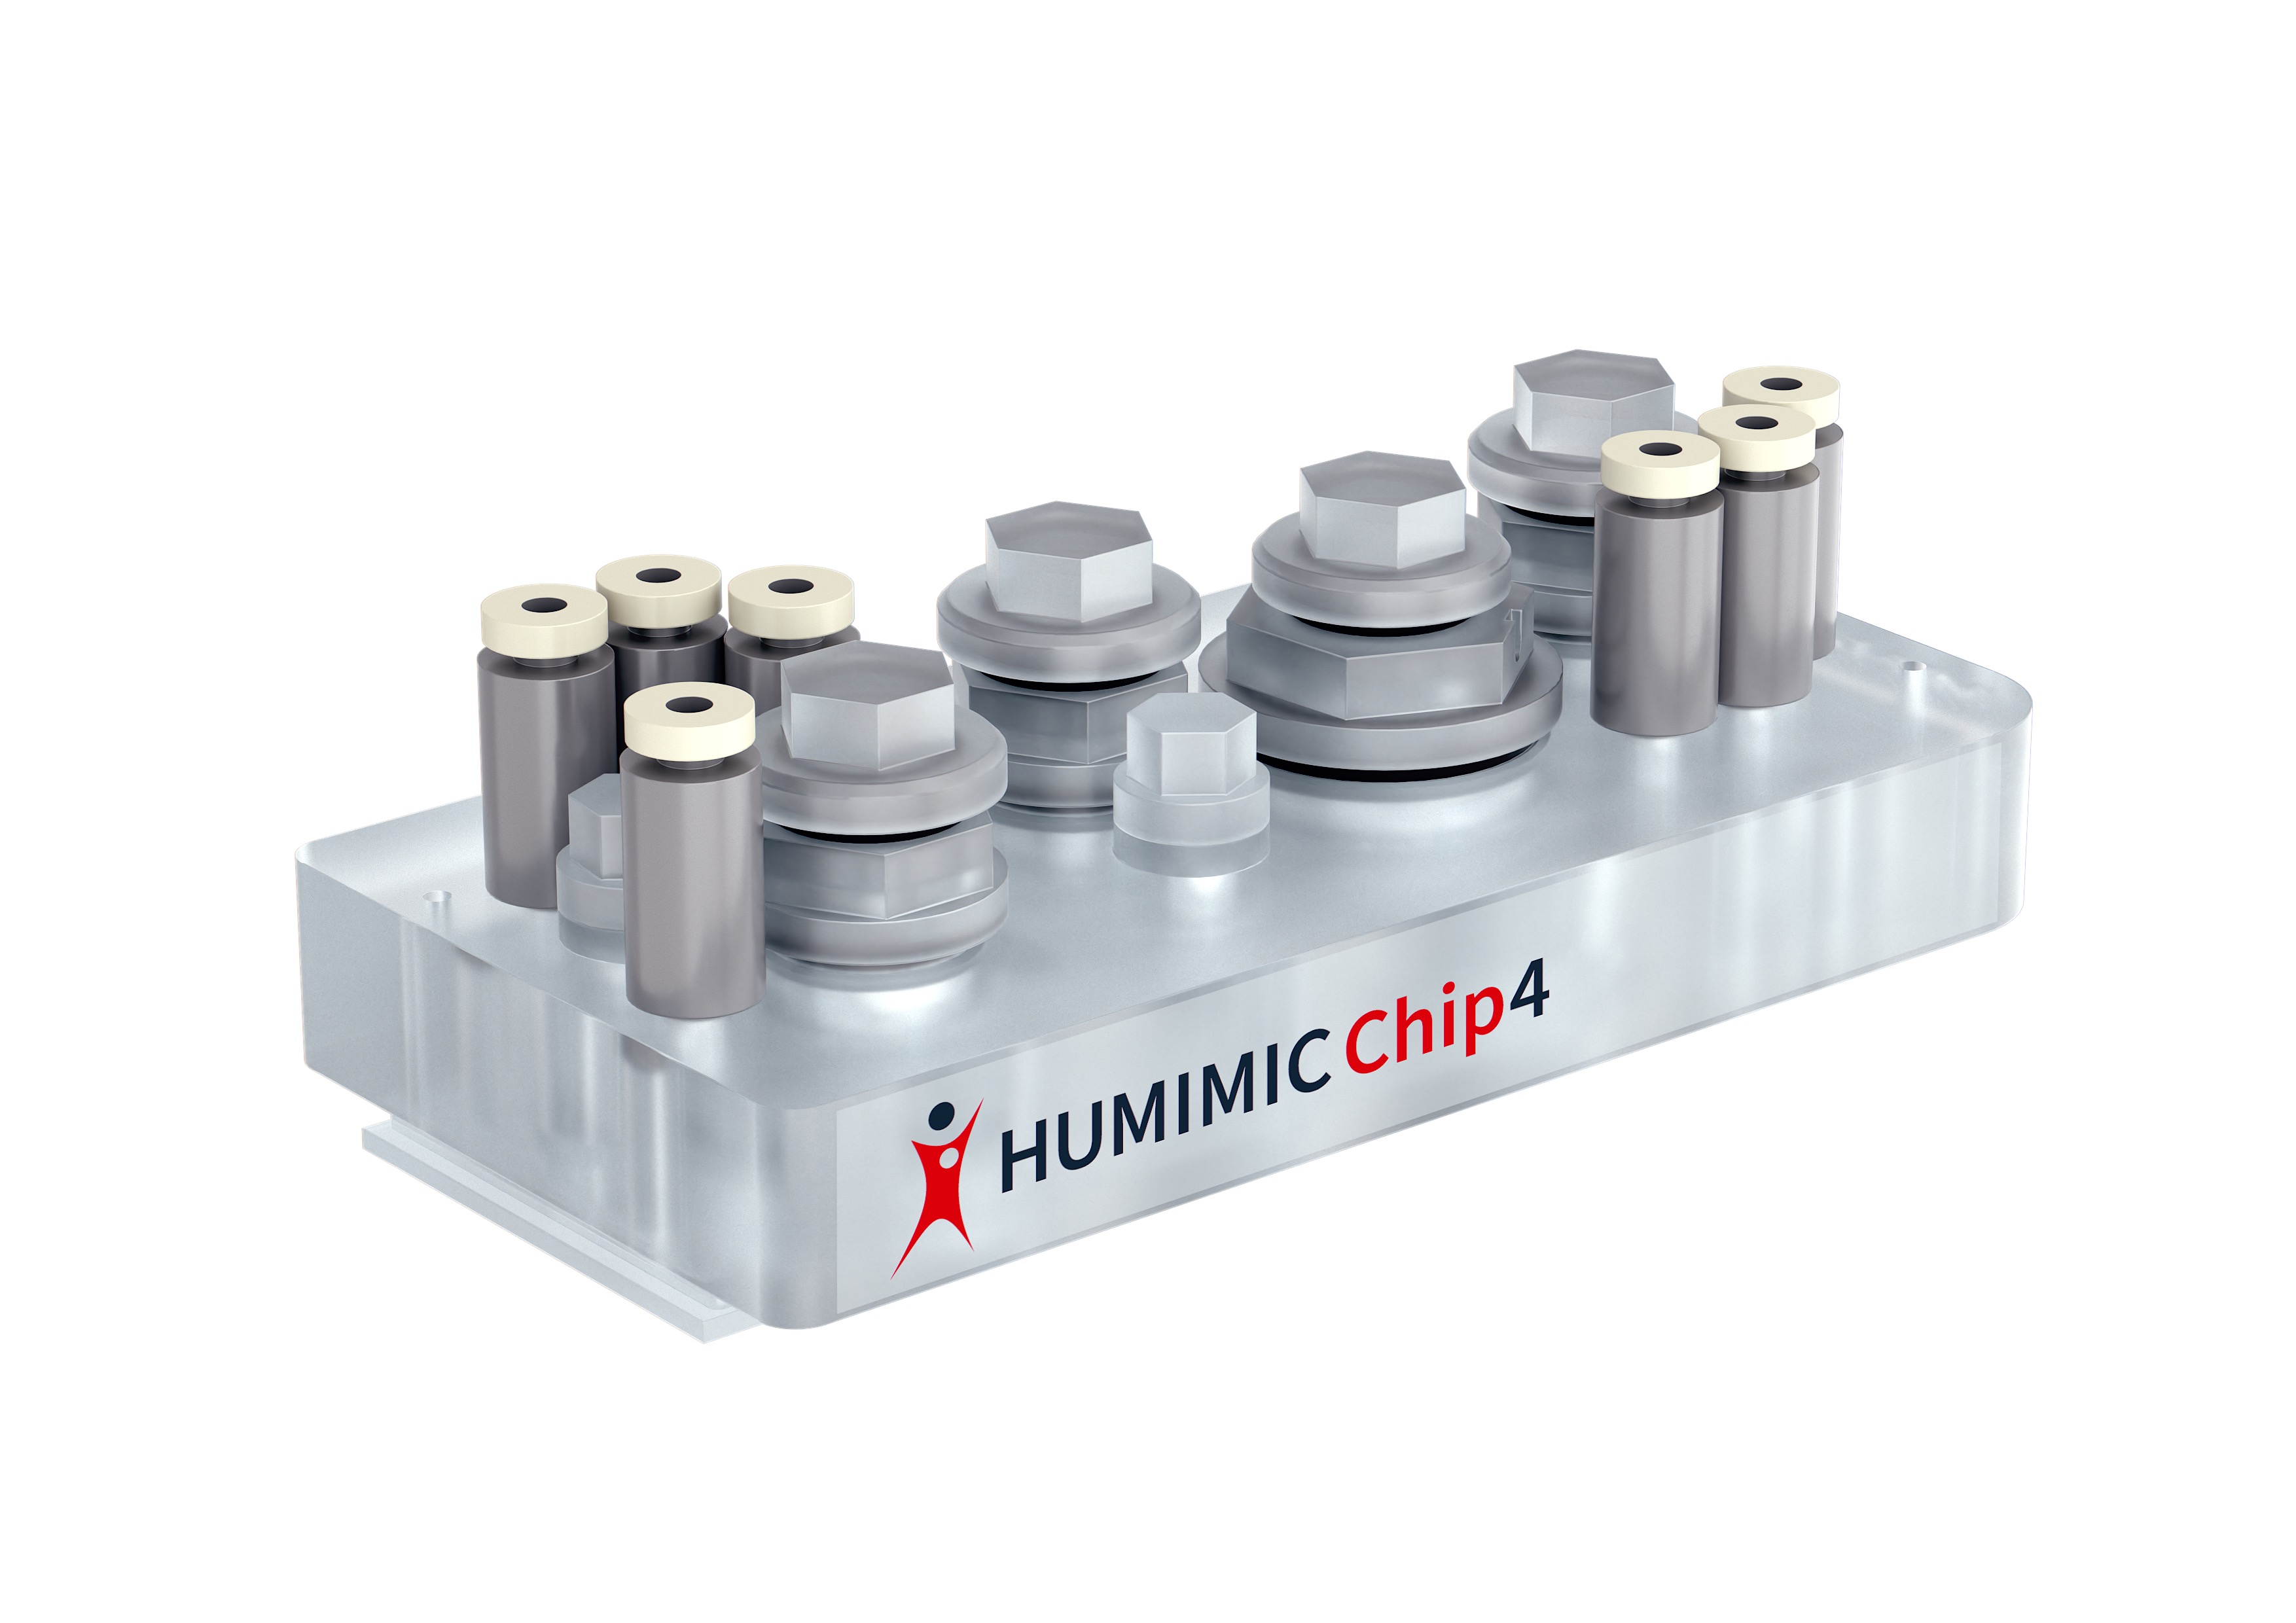 HUMIMIC Chip4